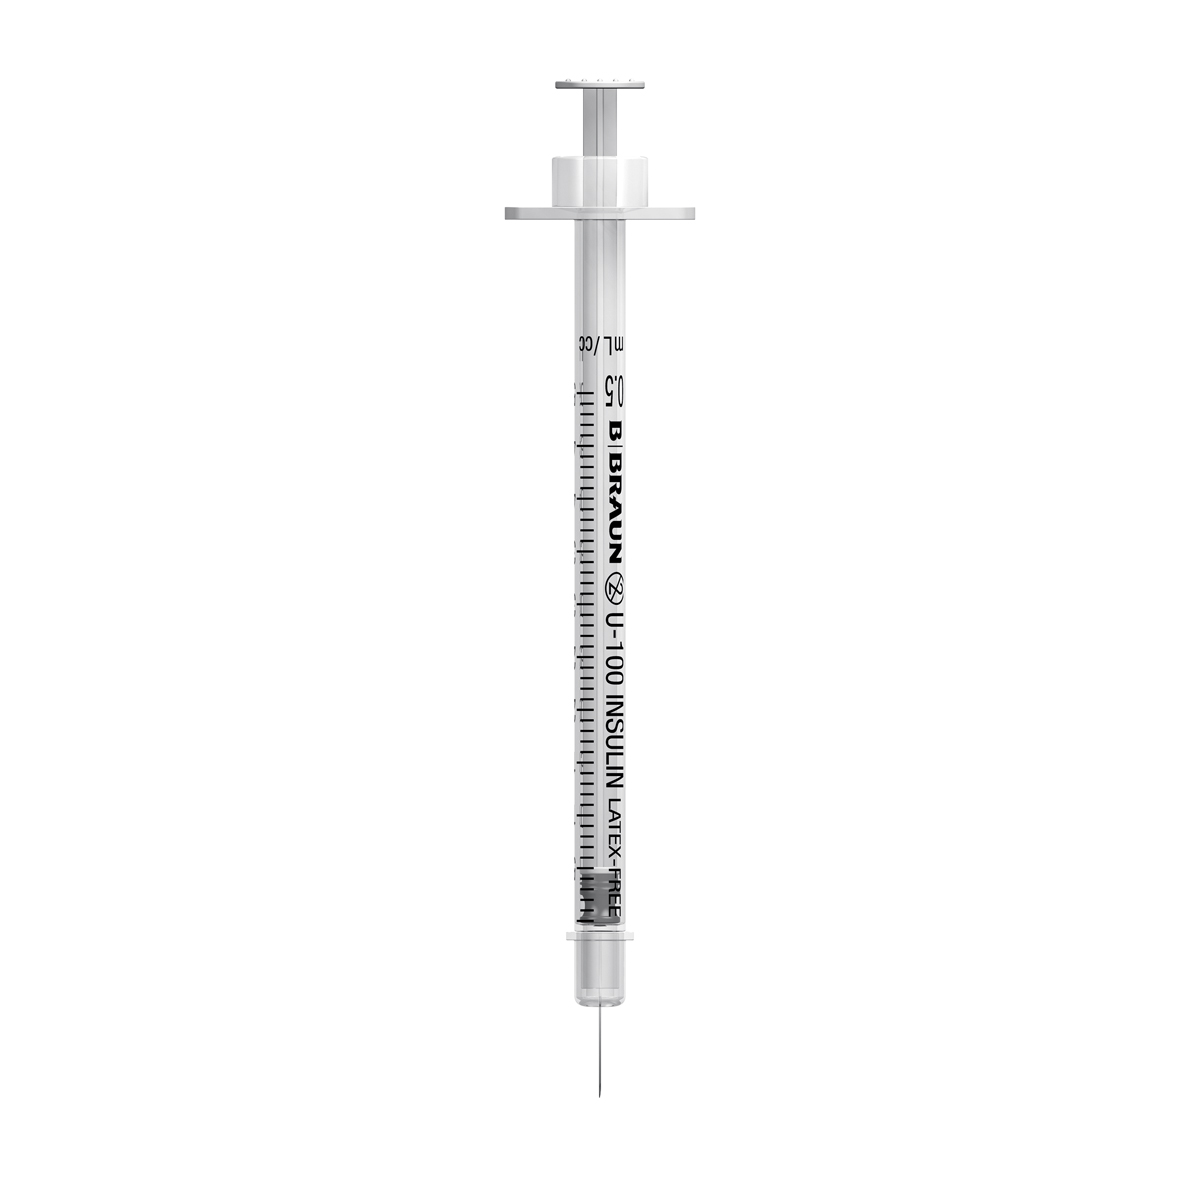 BBraun Omnican 0.5ml 30G 8mm insulin syringe